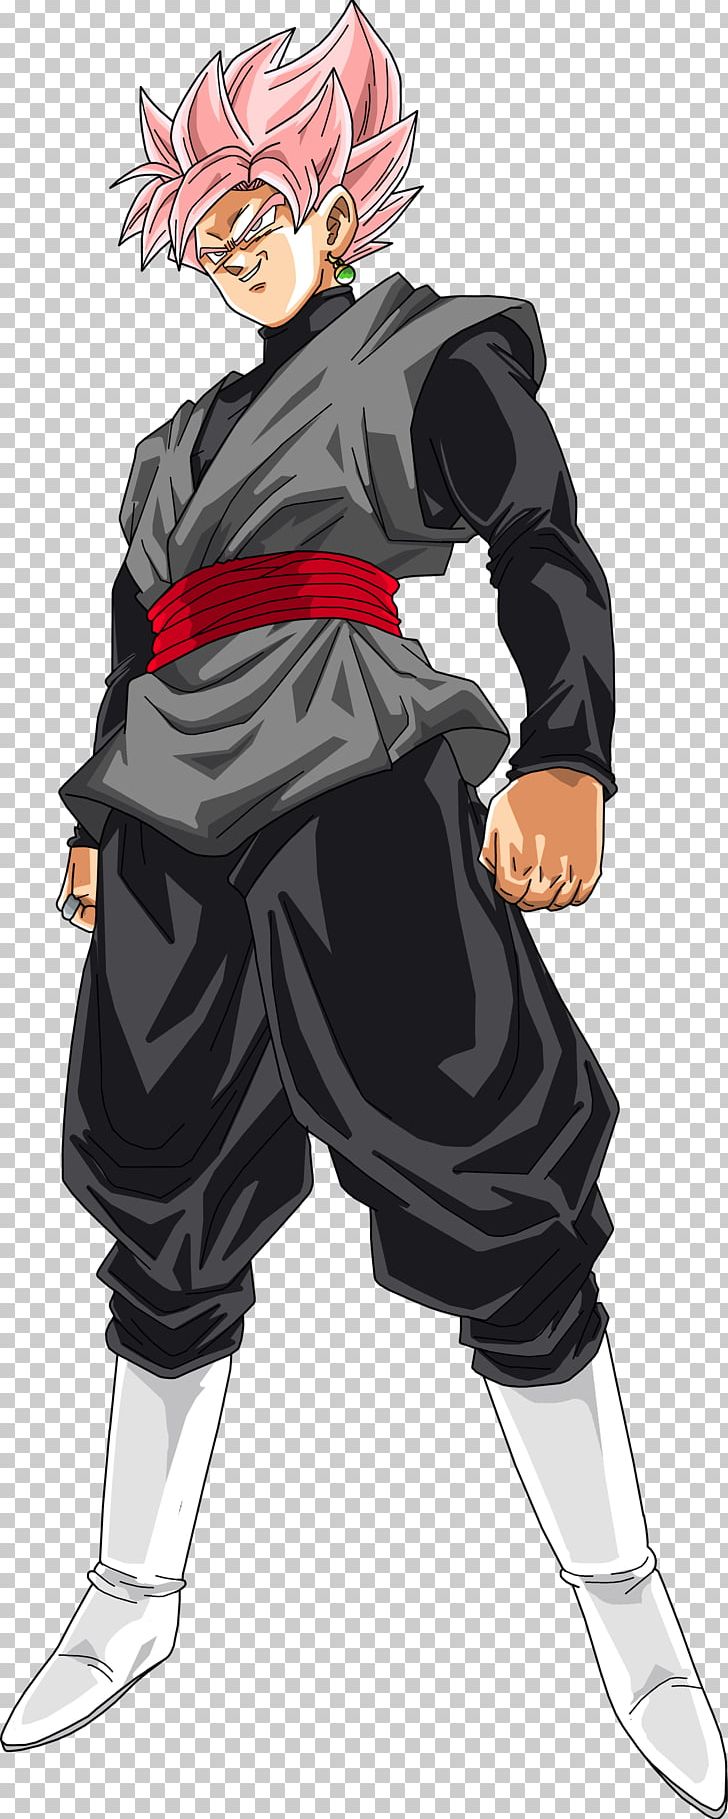 Goku Black Trunks Vegeta Super Saiya PNG, Clipart, Anime, Cartoon, Cold Weapon, Costume, Costume Design Free PNG Download